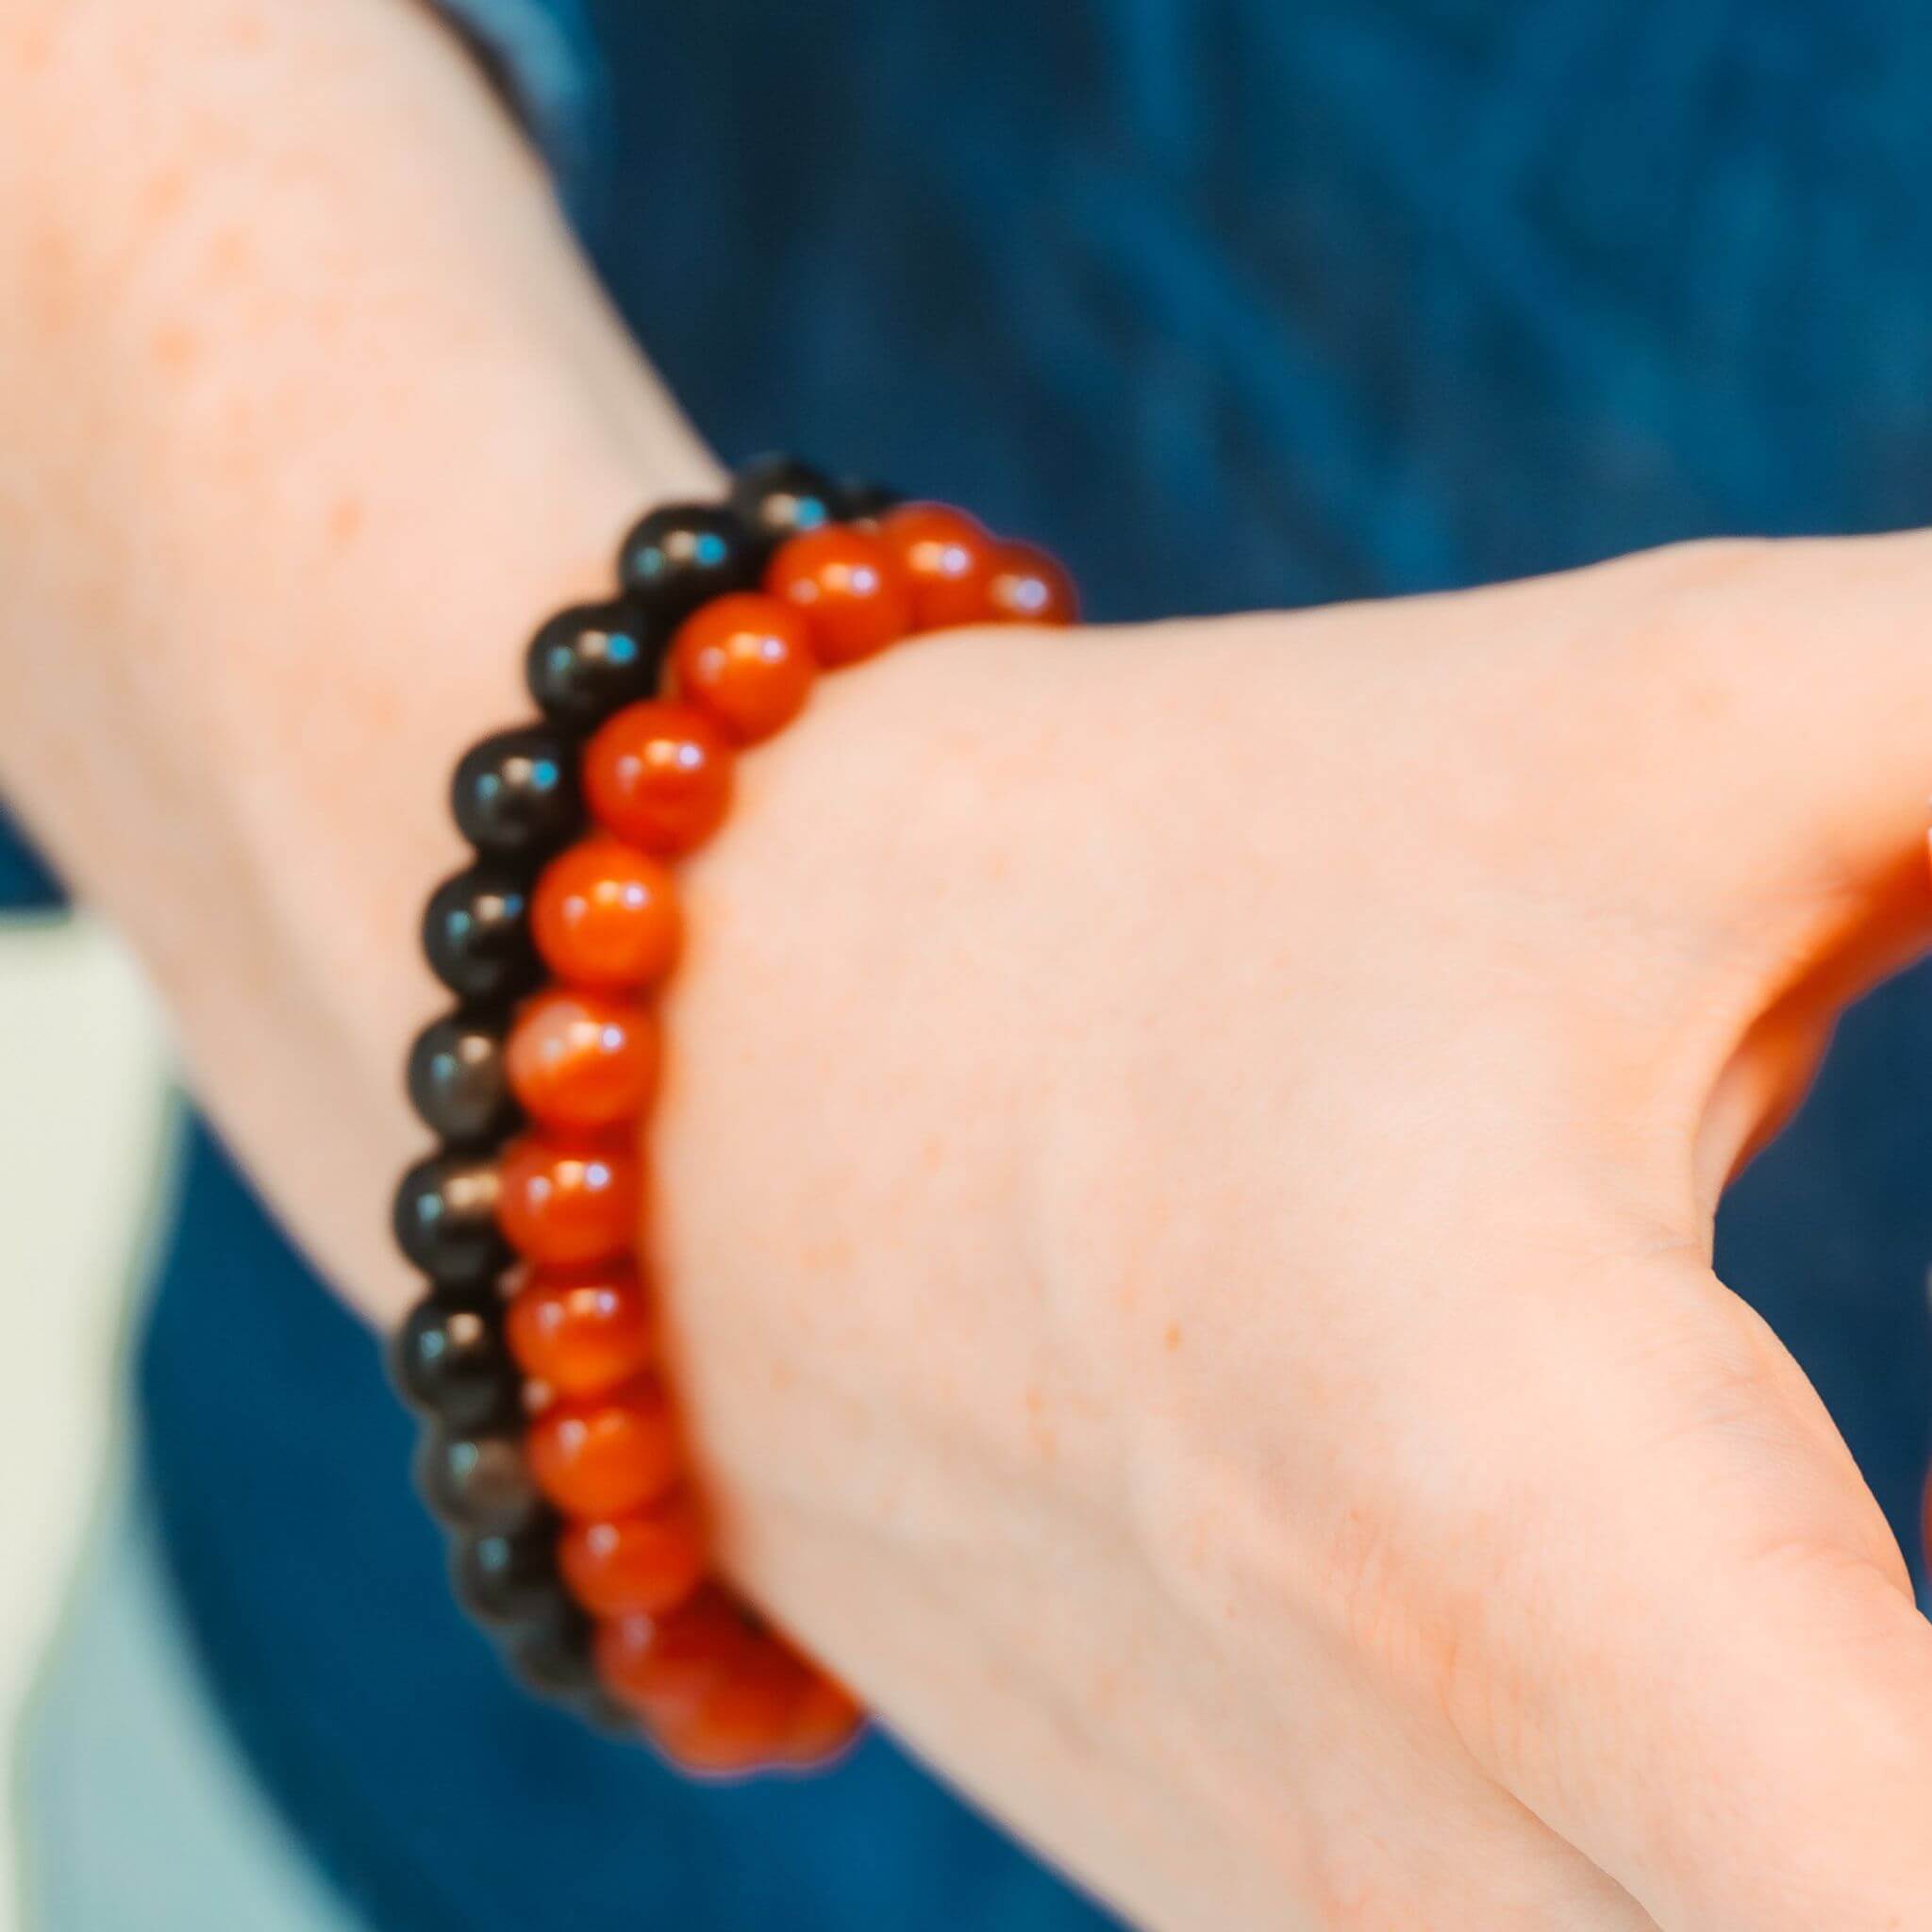 Red Agate Root Chakra Gemstone Bracelet